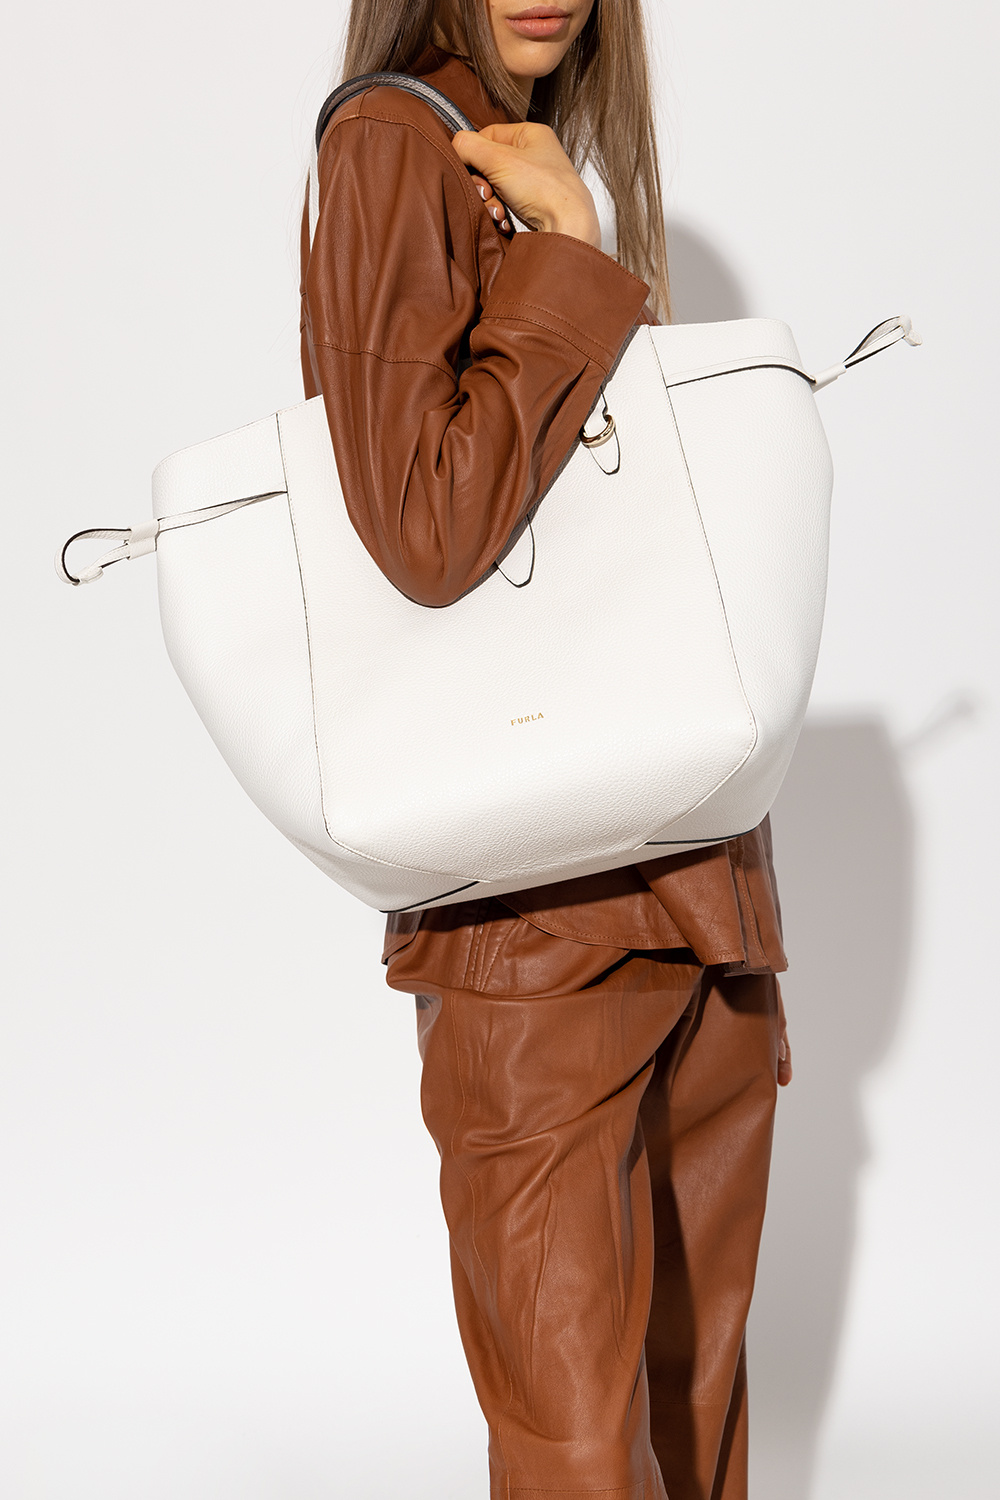 Furla ‘Net Large’ shopper gabbana bag